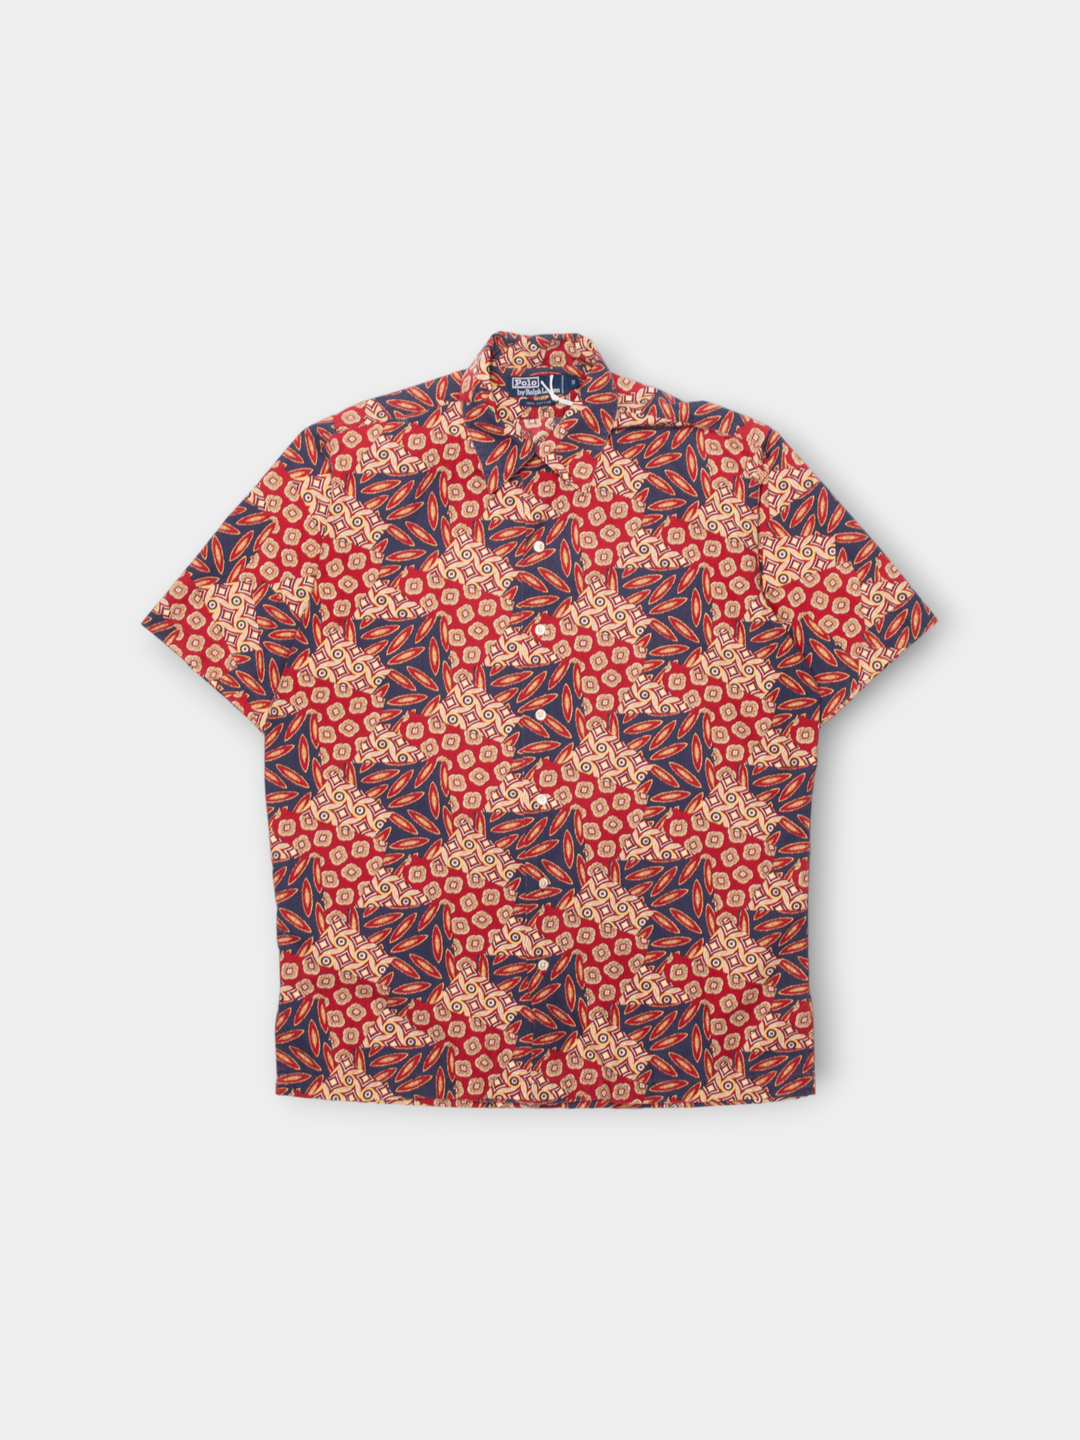 90s Ralph Lauren Abstract Hawaiian Shirt (S)